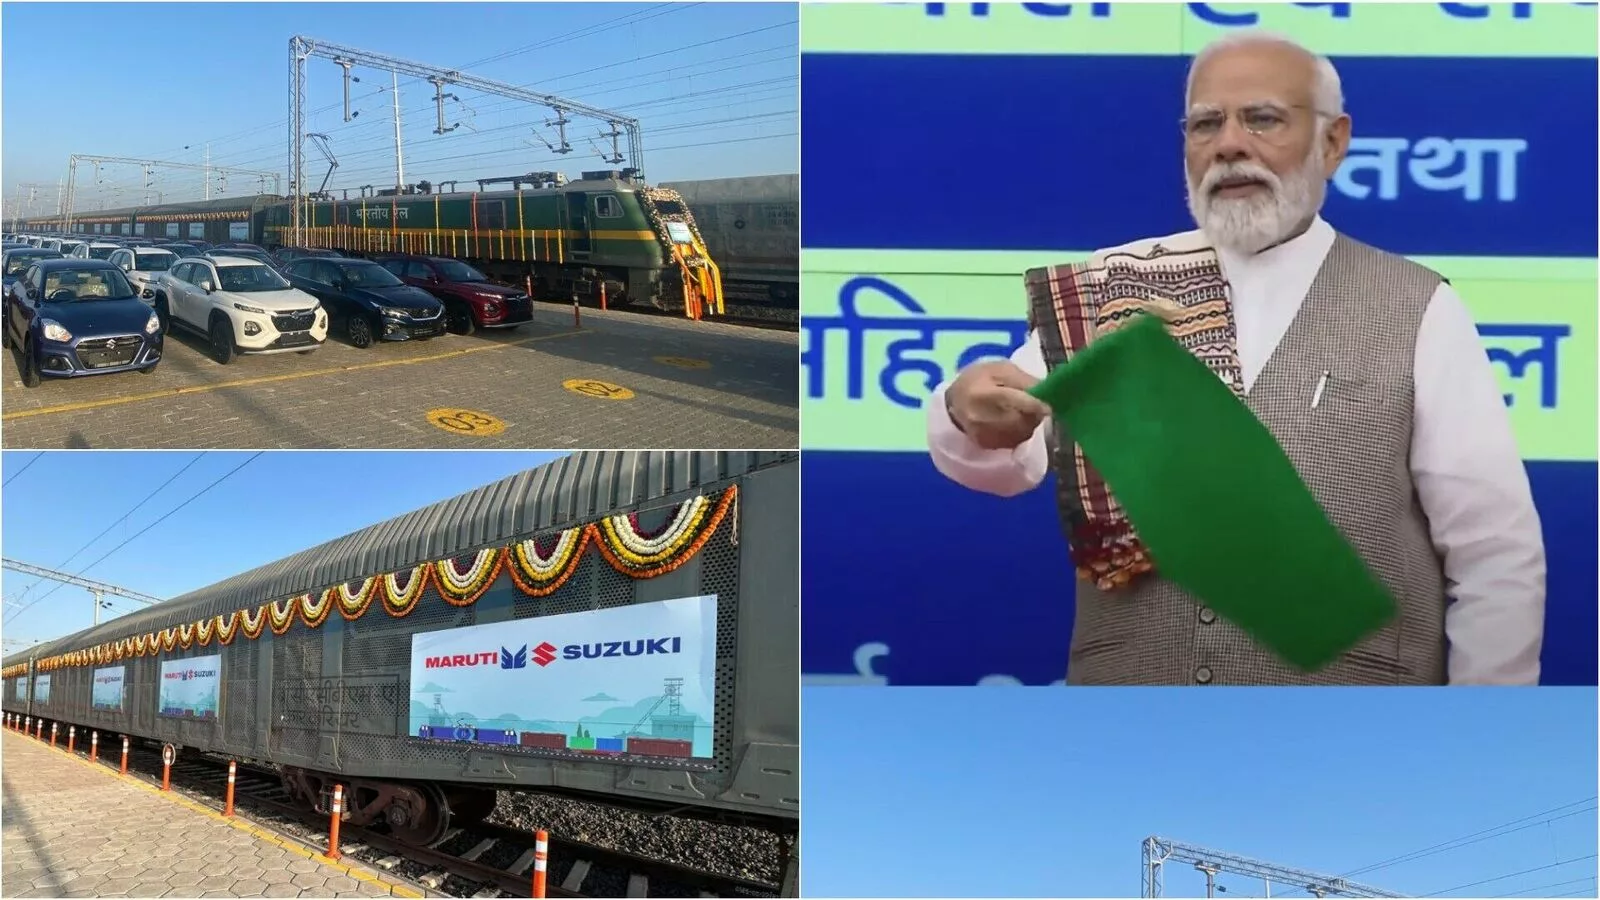 PM Modi inaugurates India's first in-plant railway siding at Suzuki Gujarat